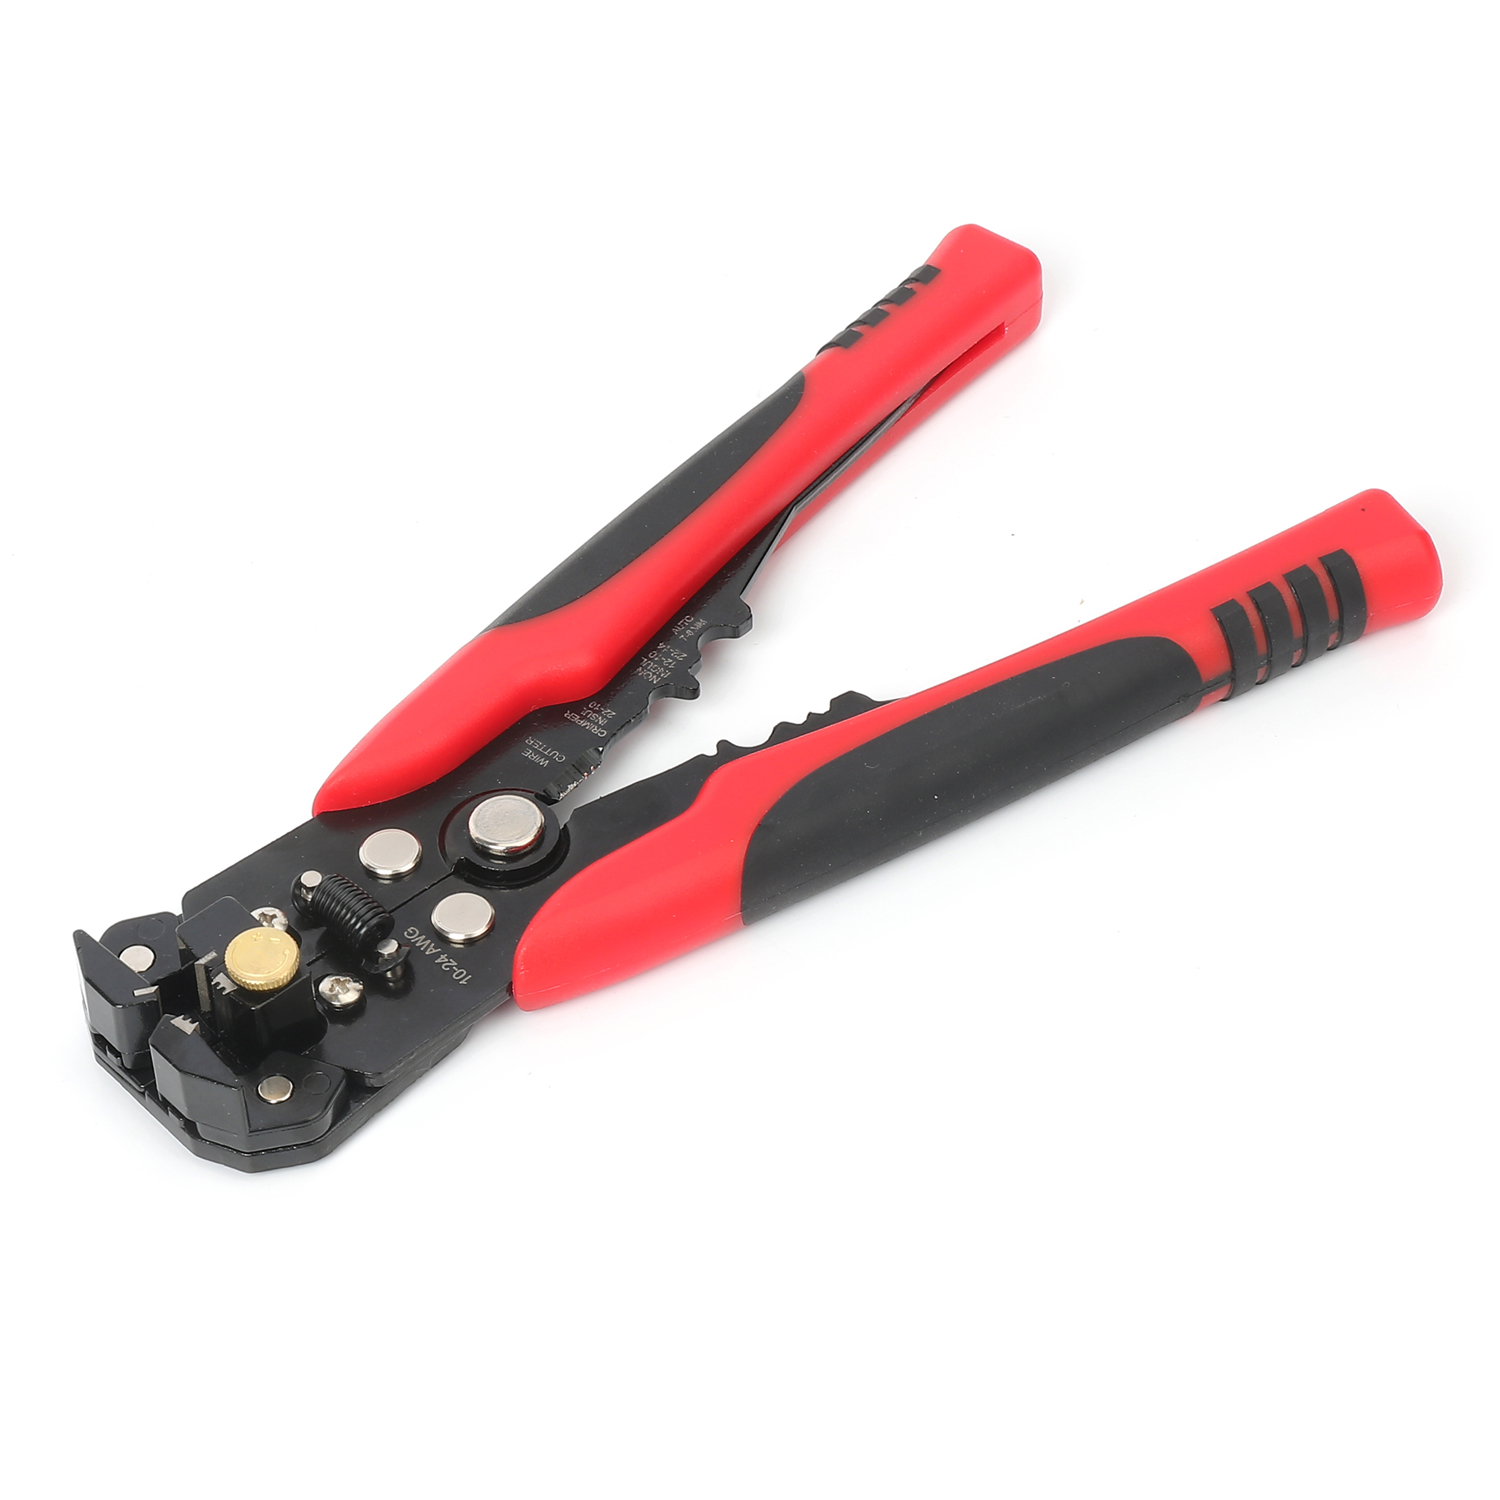 EverStart 8-inch Self Adjusting Wire Stripper, Model 5138, Black ,Red, UL Listed, New - image 1 of 10